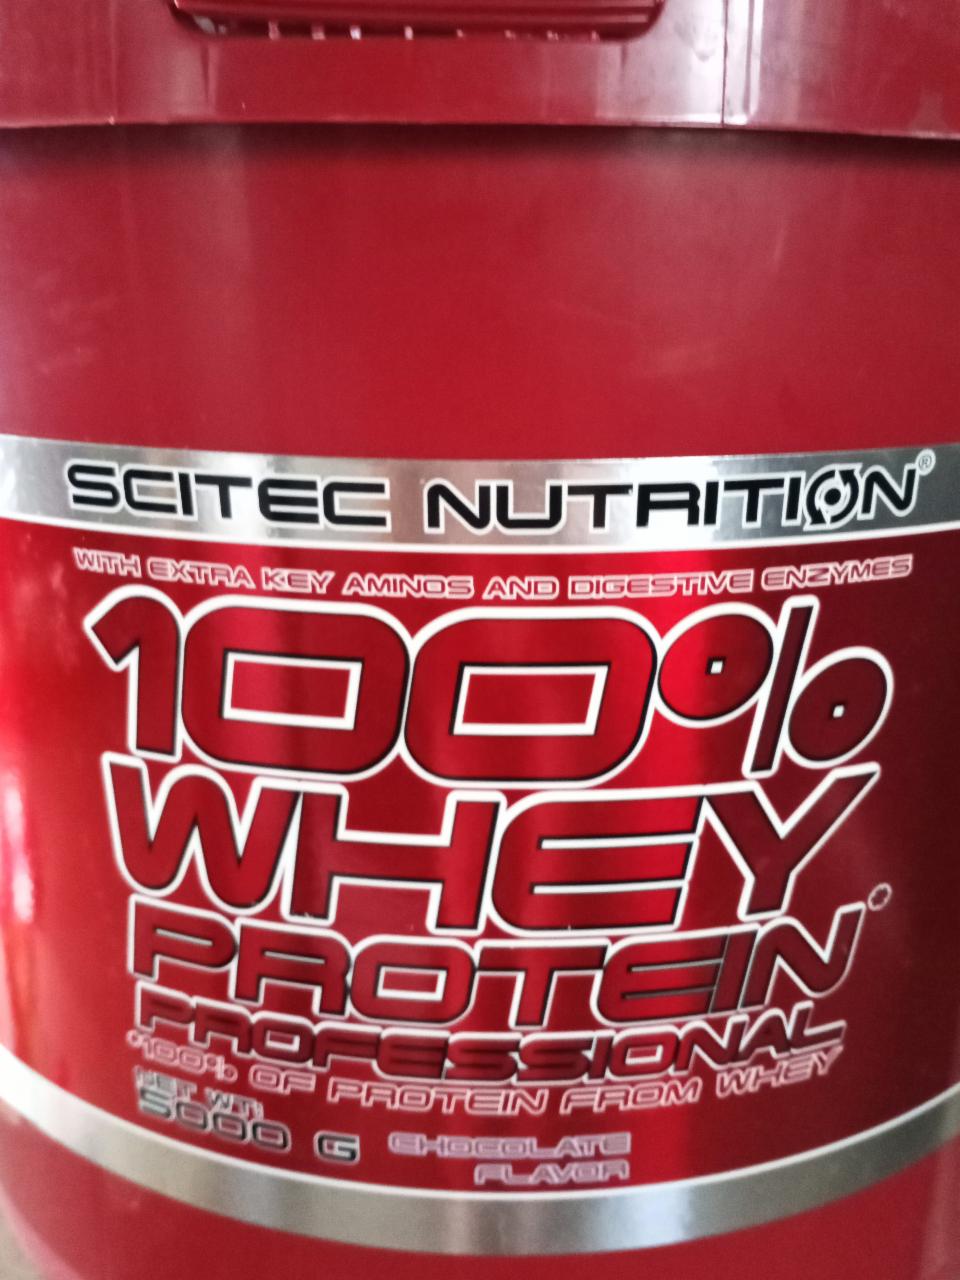 Képek - 100% whey protein professional chocolate flavor Scitec Nutrition